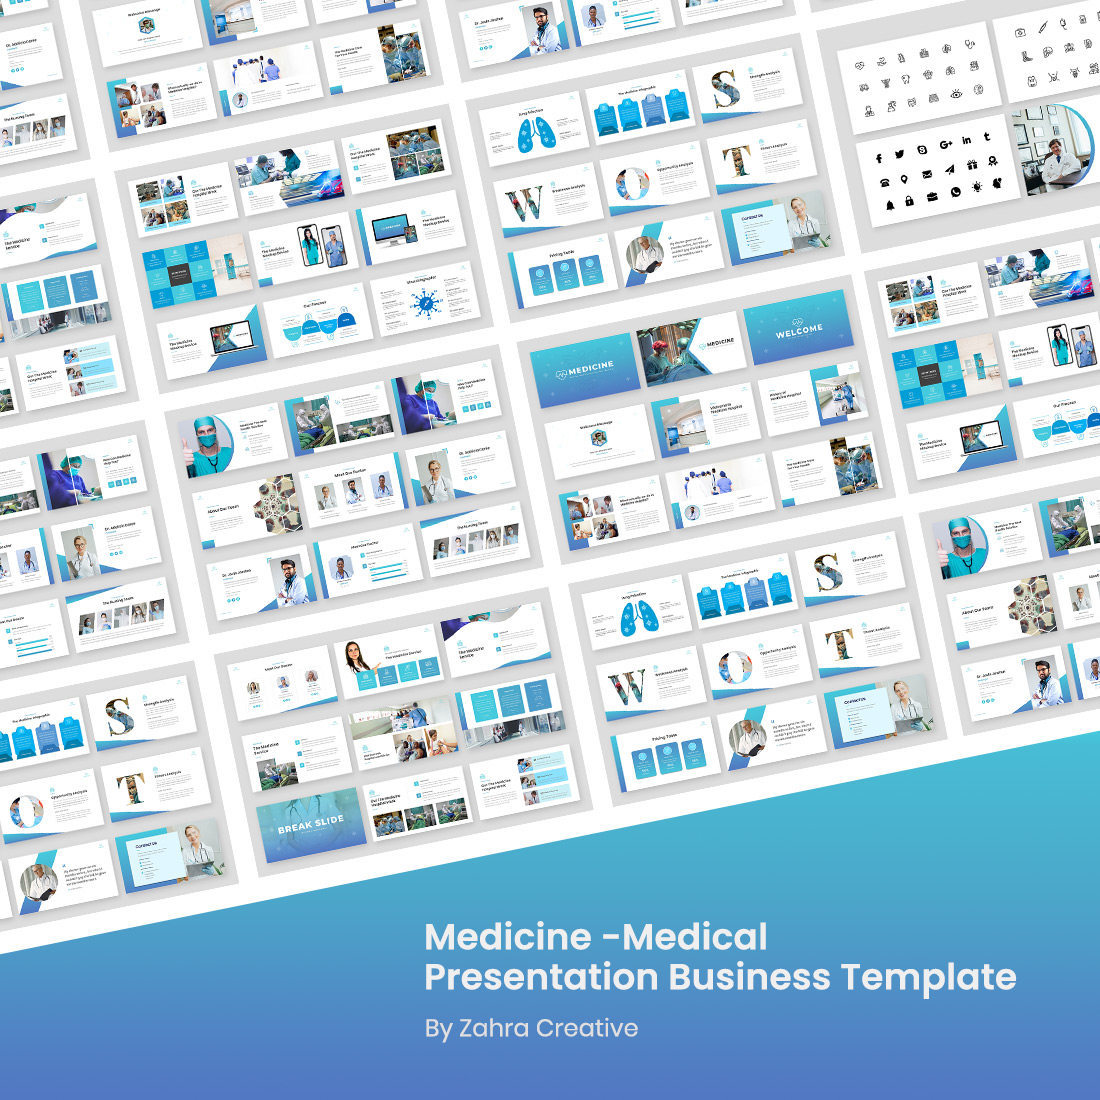 Business Medical Presentation Keynote Template cover image.